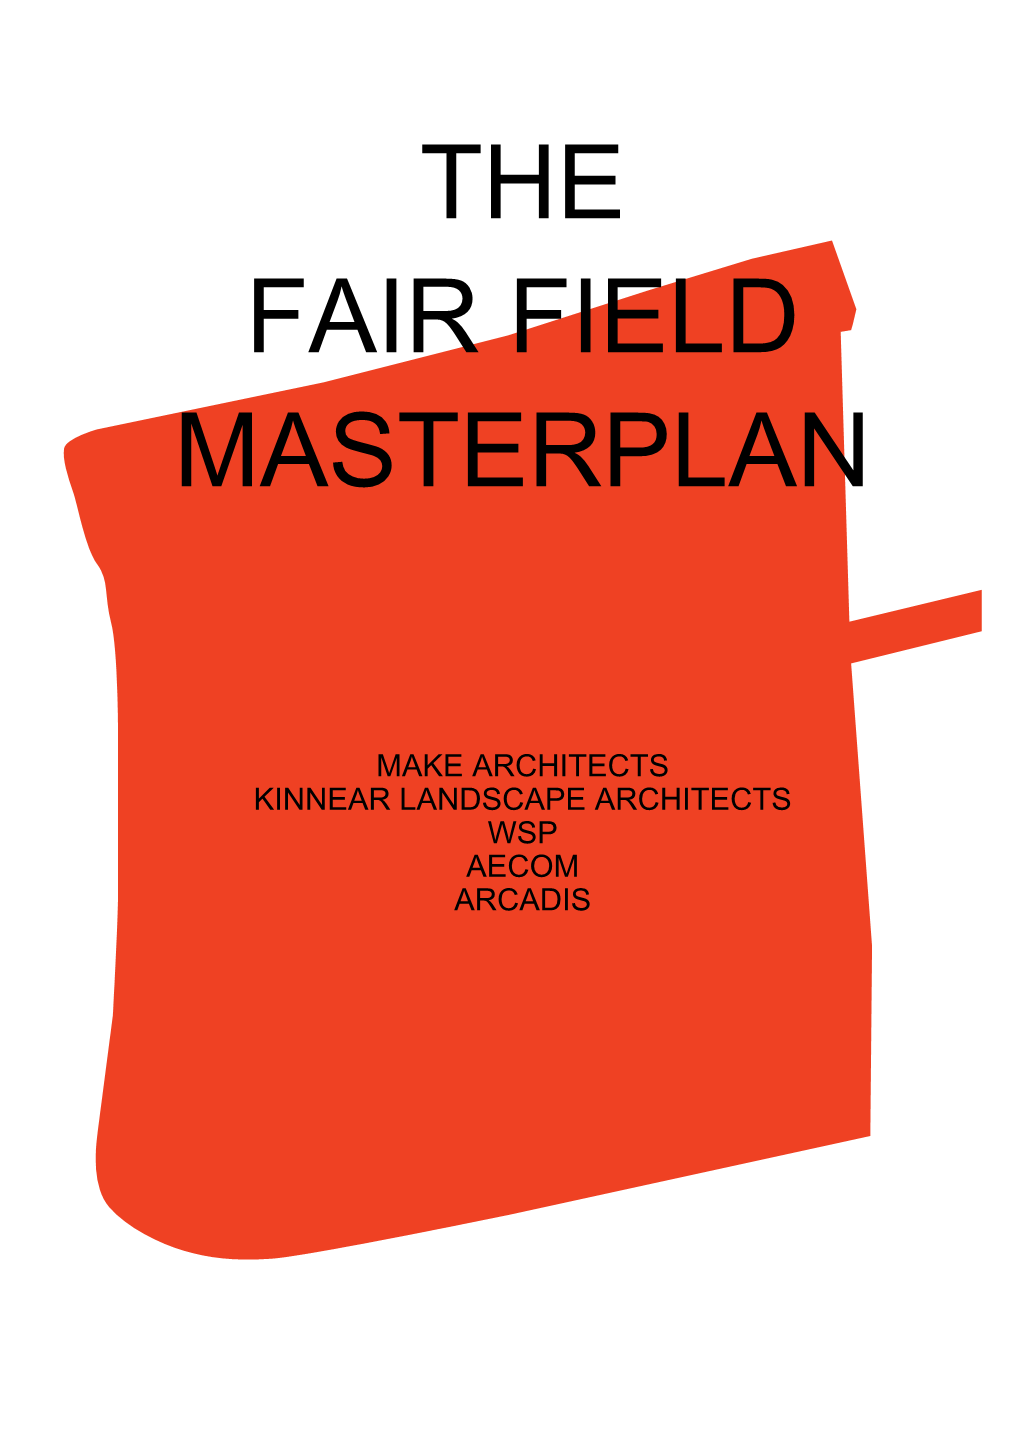 The Fair Field Masterplan